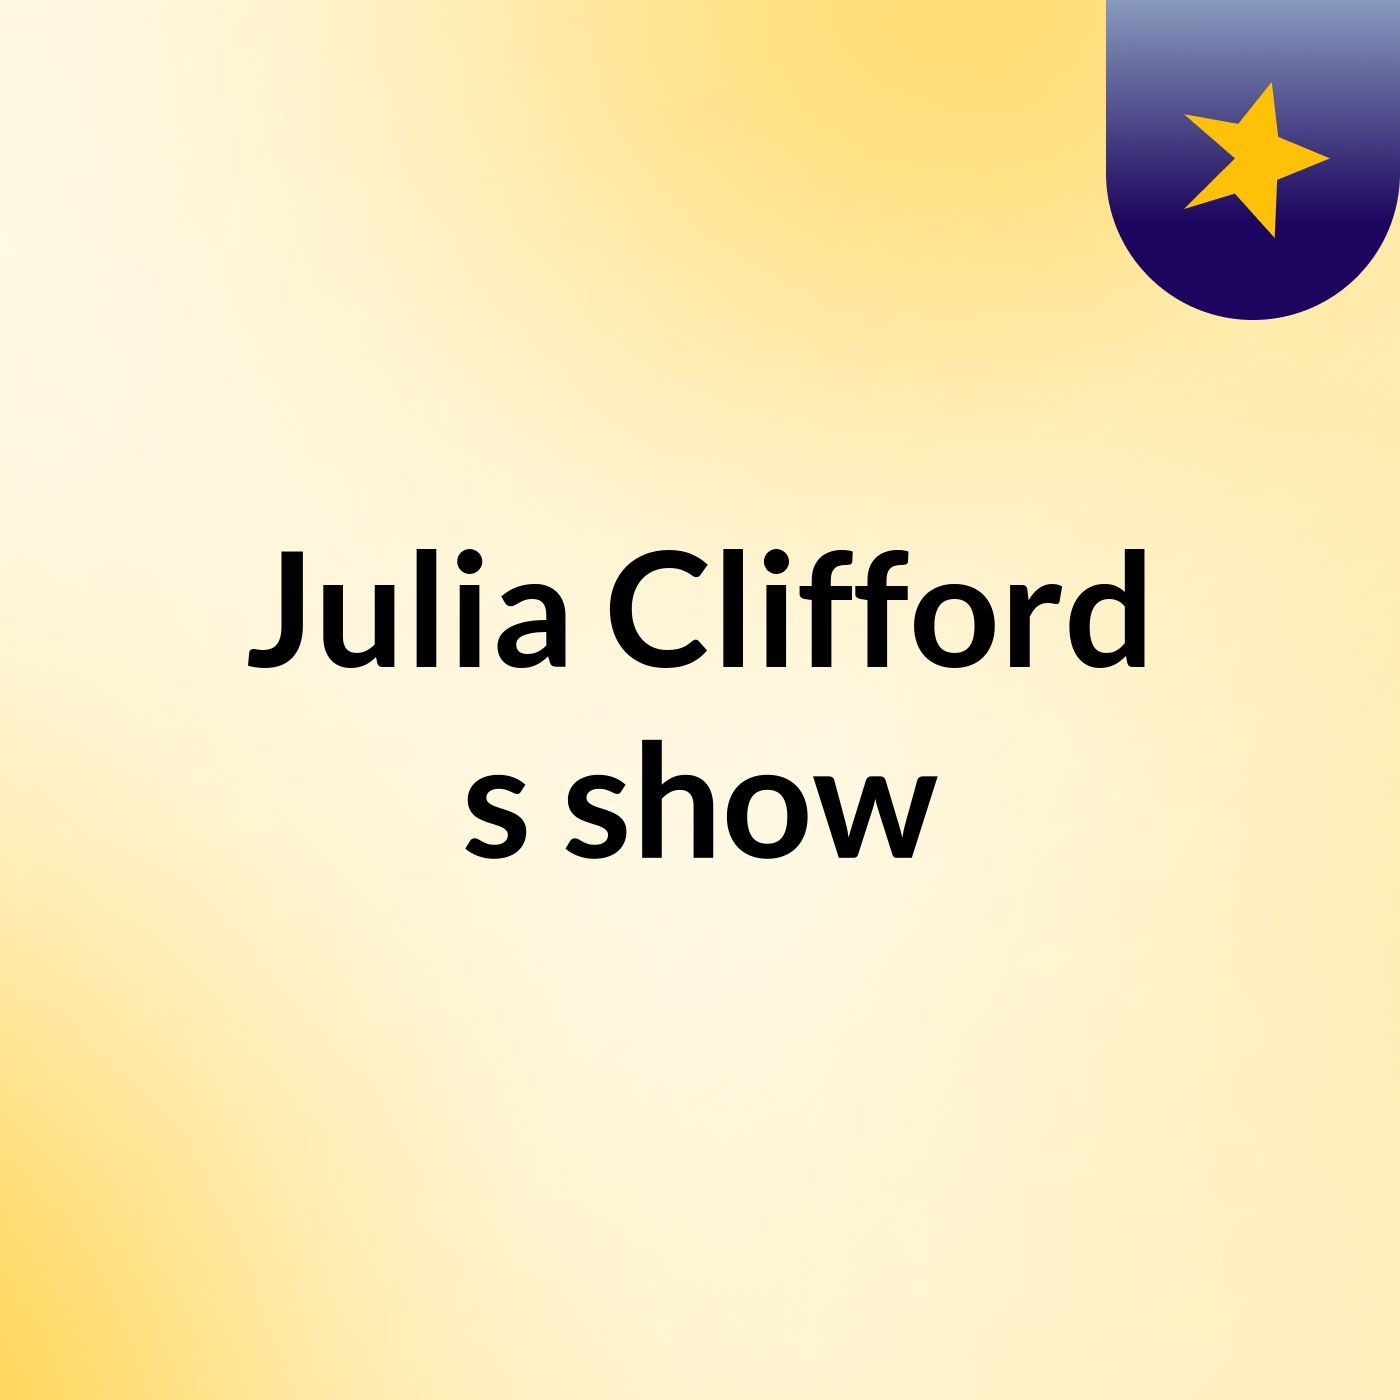 Julia Clifford's show